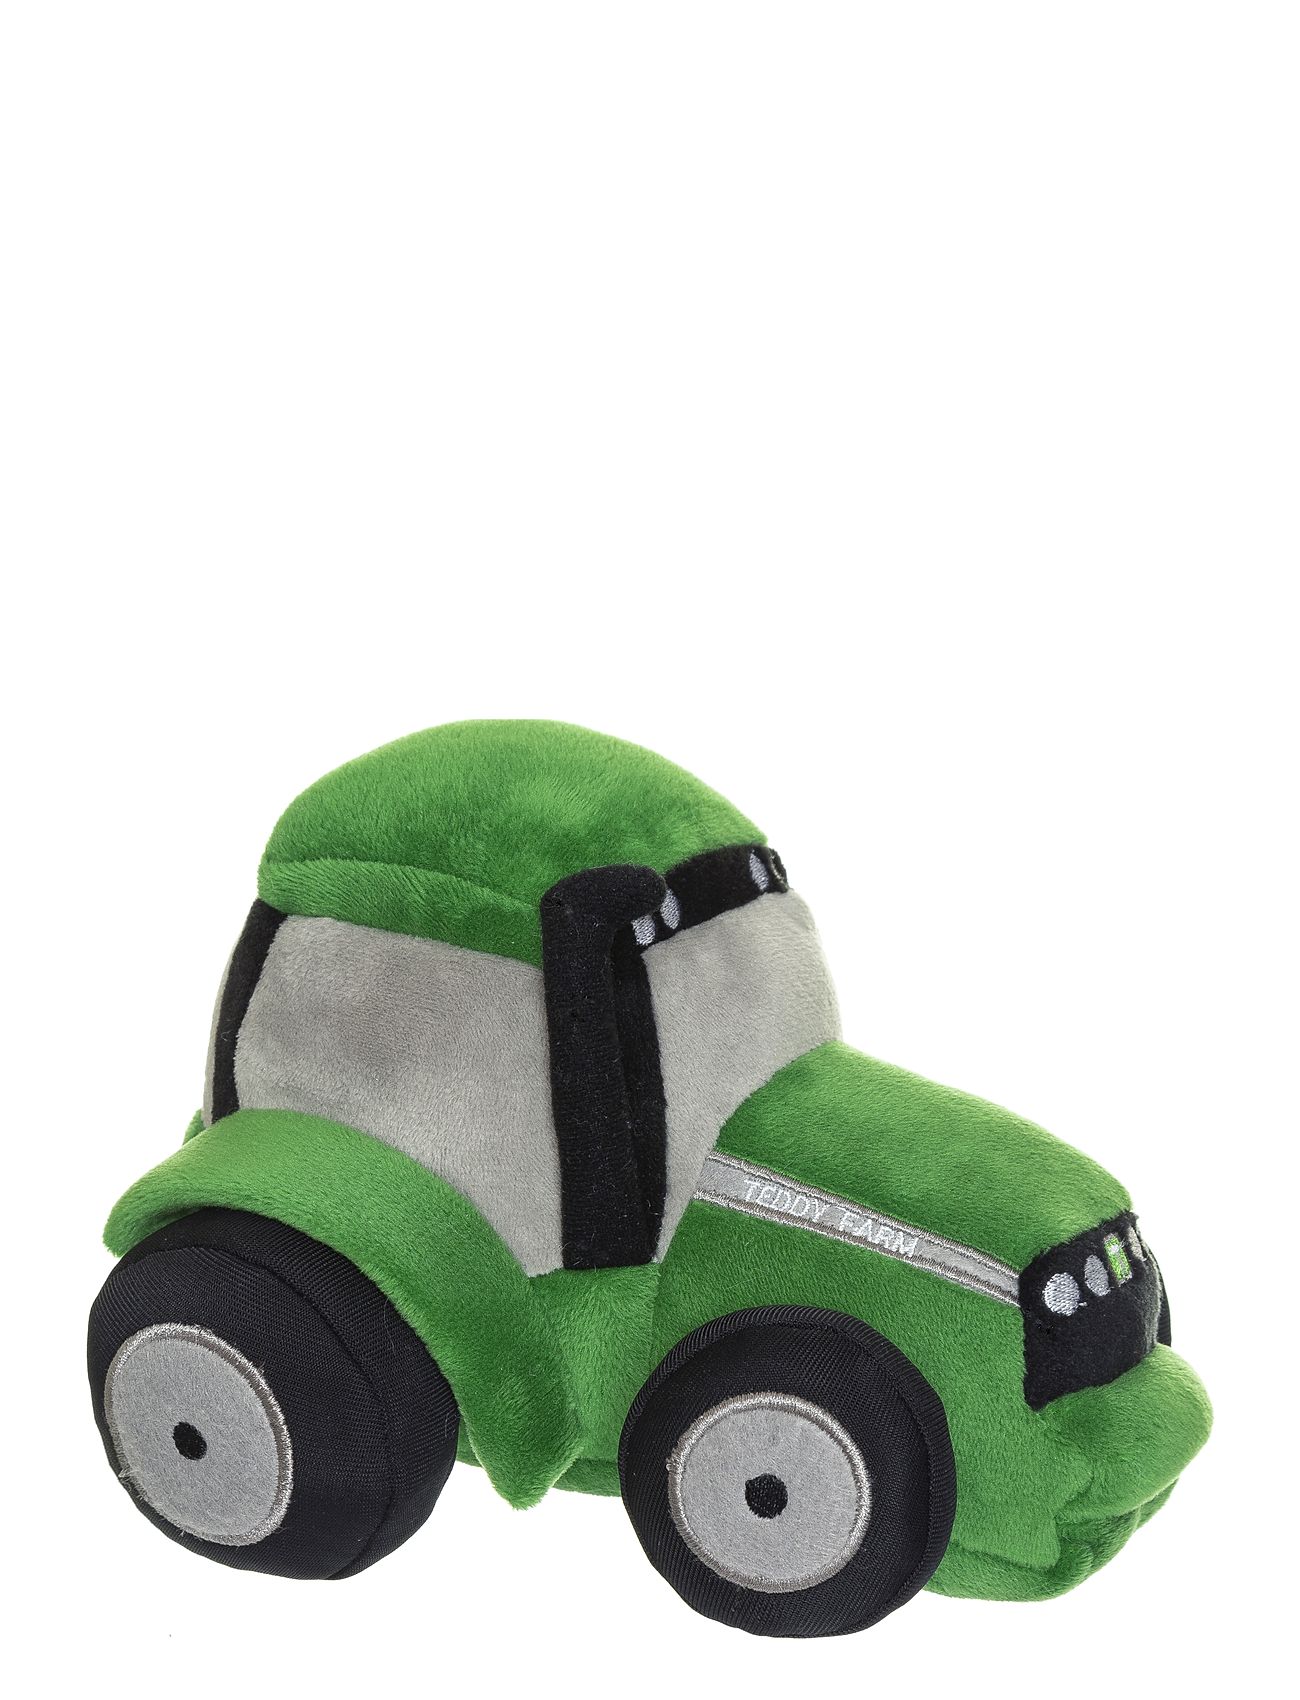 Teddy Farm, Tractor Toys Soft Toys Stuffed Toys Green Teddykompaniet